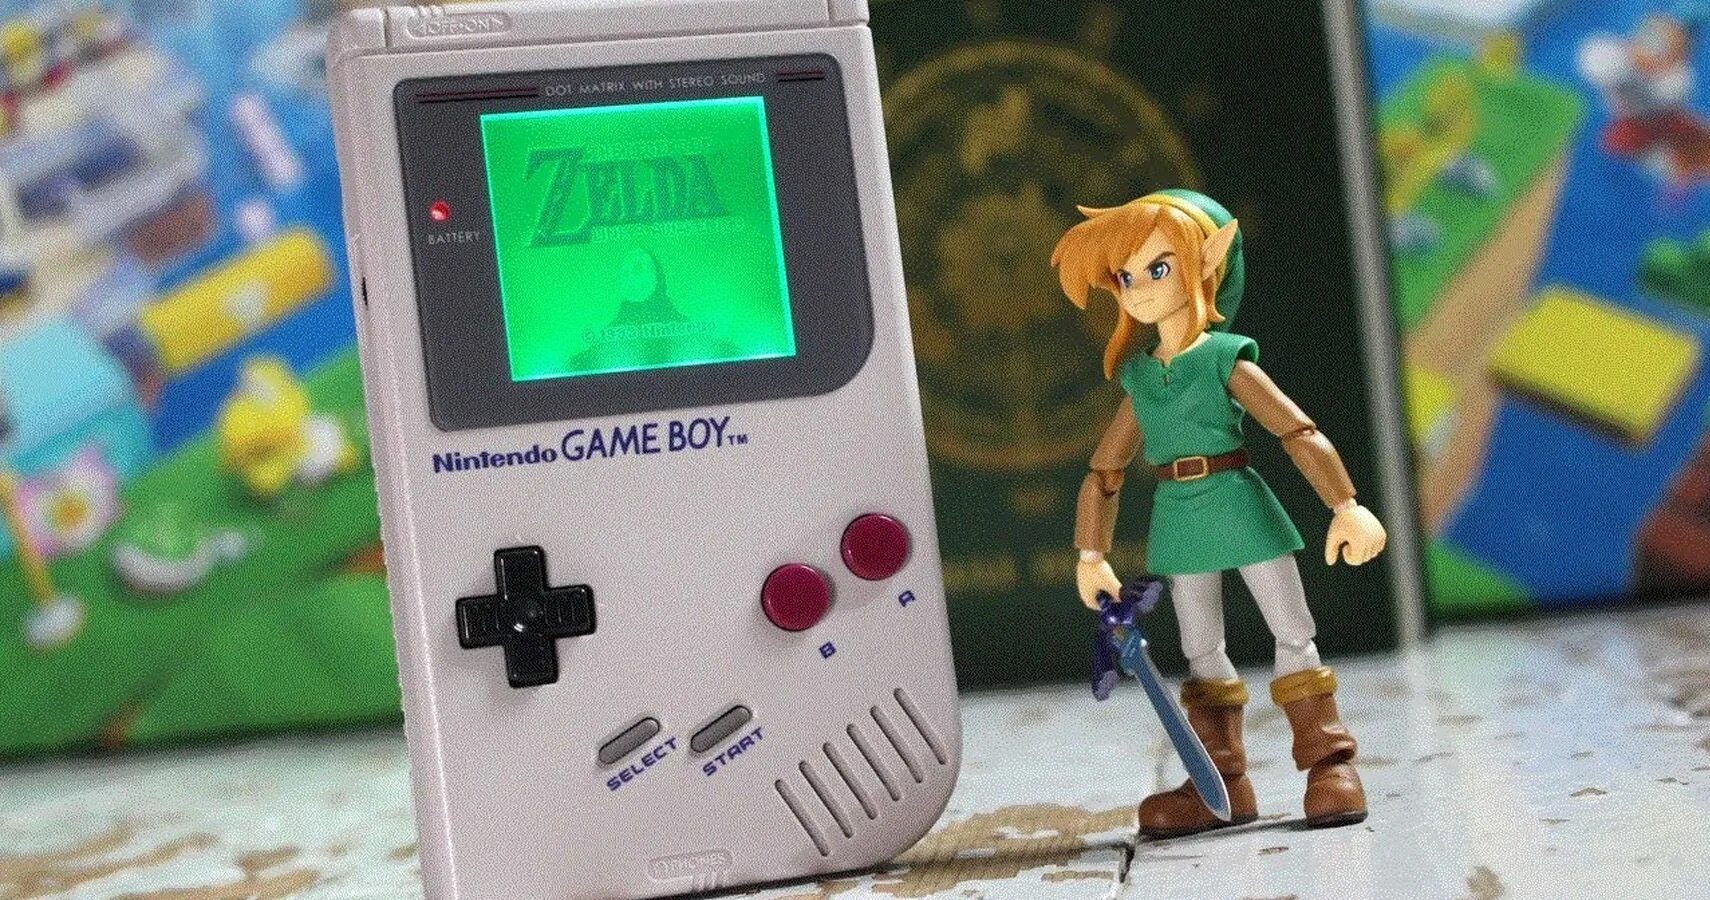 The Legend of Zelda игра Nintendo. Зельда игра на Нинтендо. Nintendo Zelda приставка. Линк Зельда Нинтендо. Nintendo link